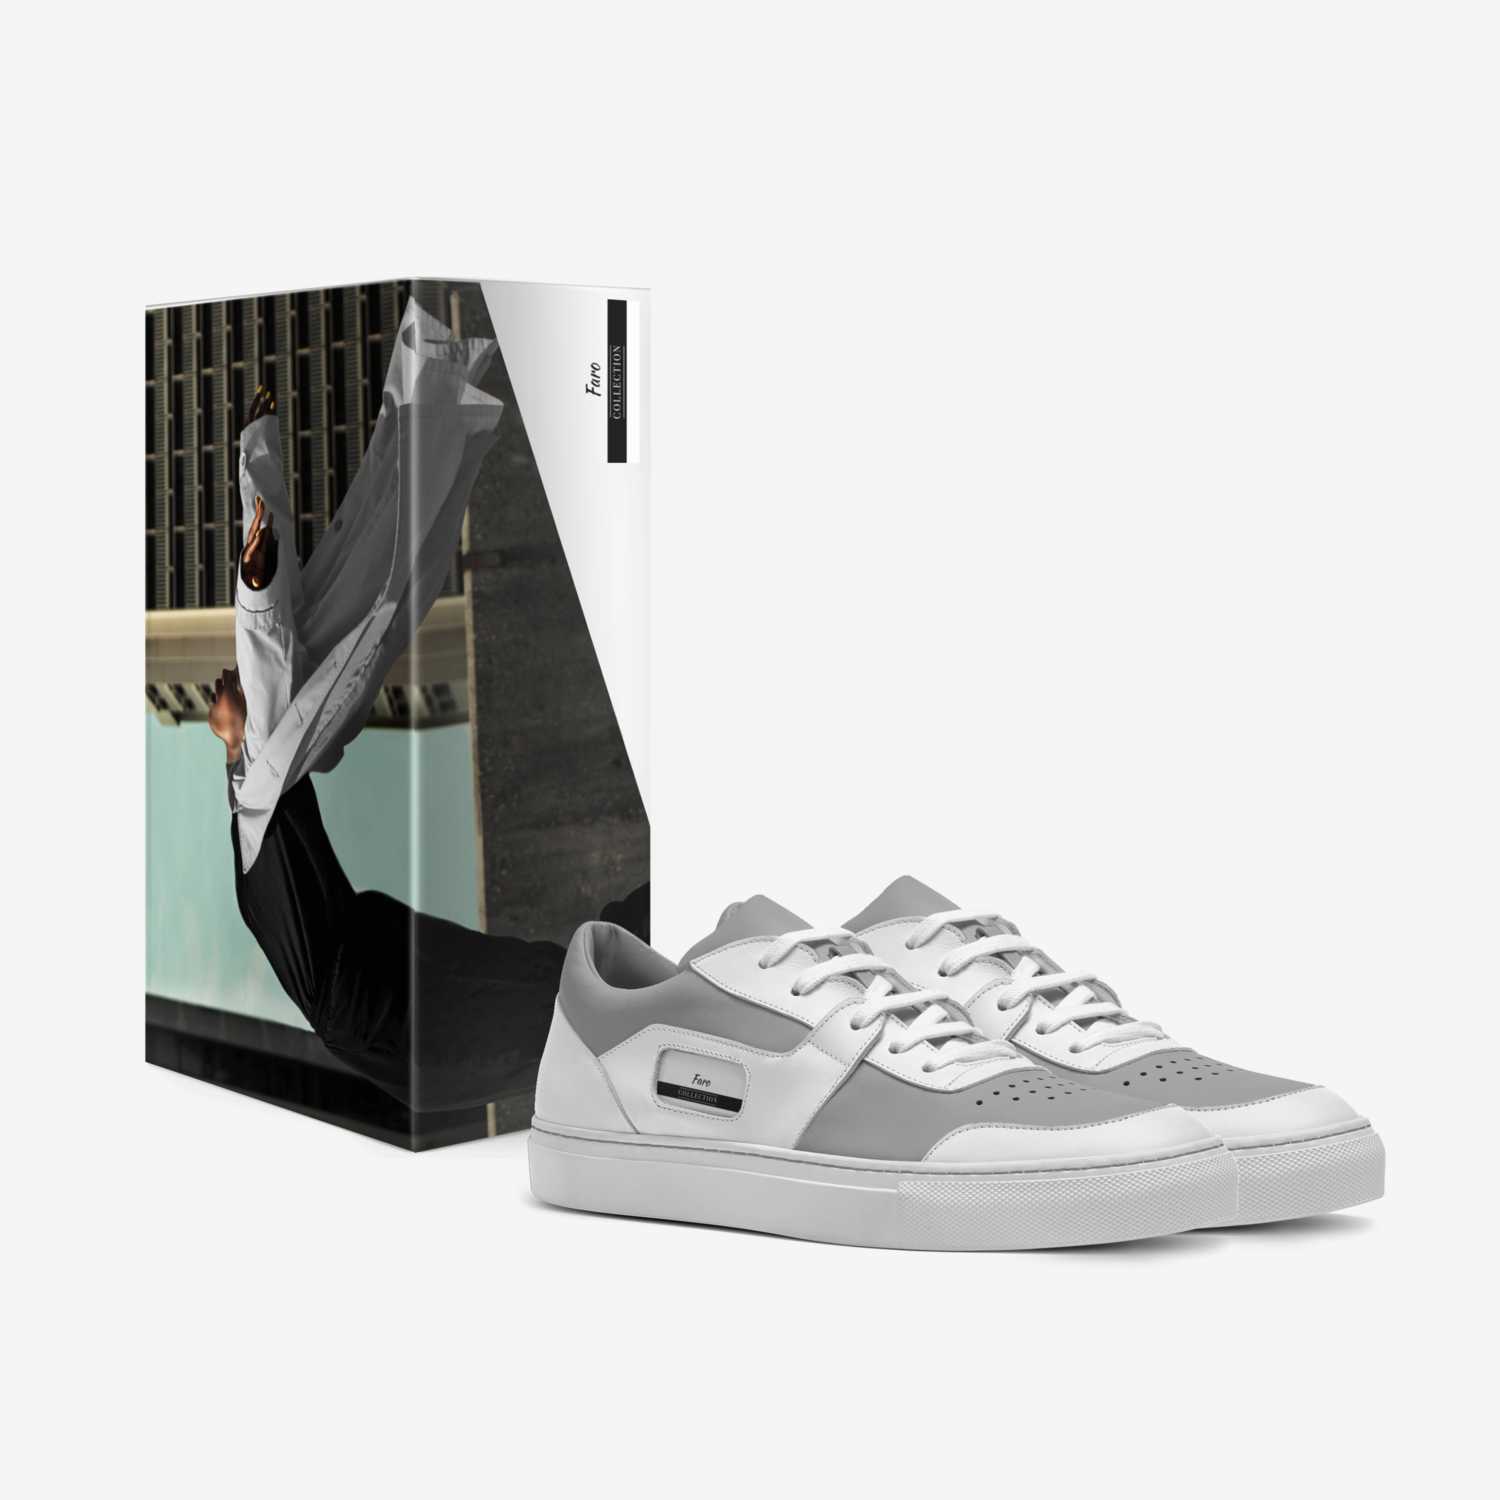 Faro custom made in Italy shoes by Faro Lo Cricchio | Box view